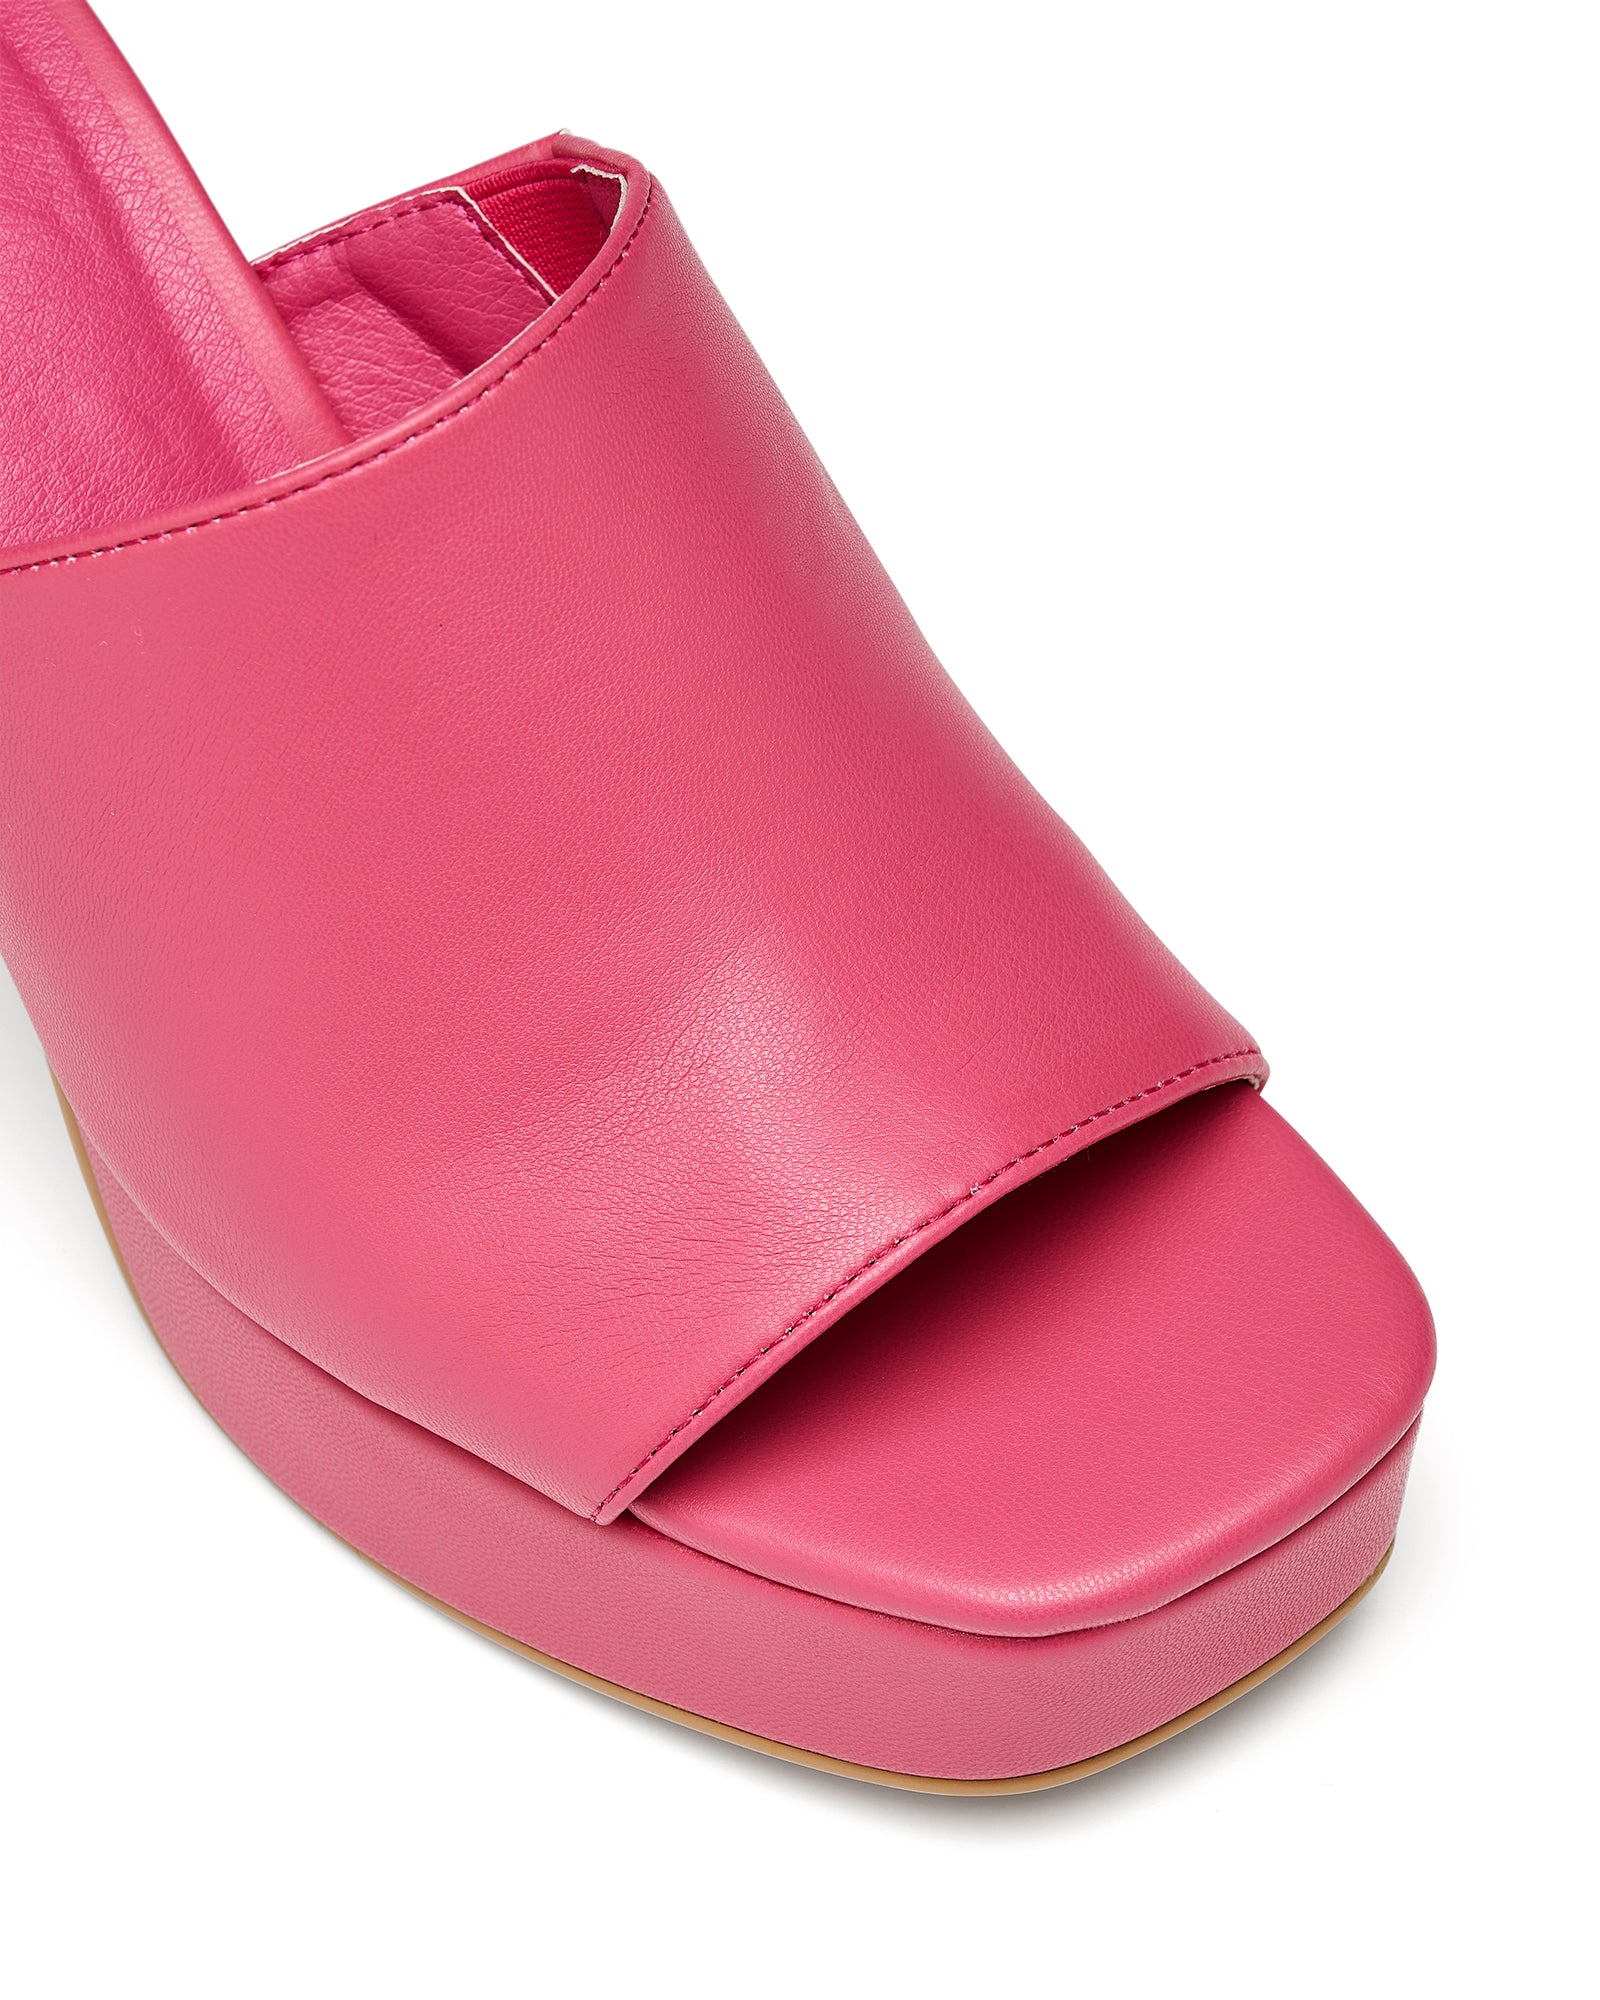 Therapy Shoes Arizona Pink | Women's Heels | Sandals | Platform | Mule